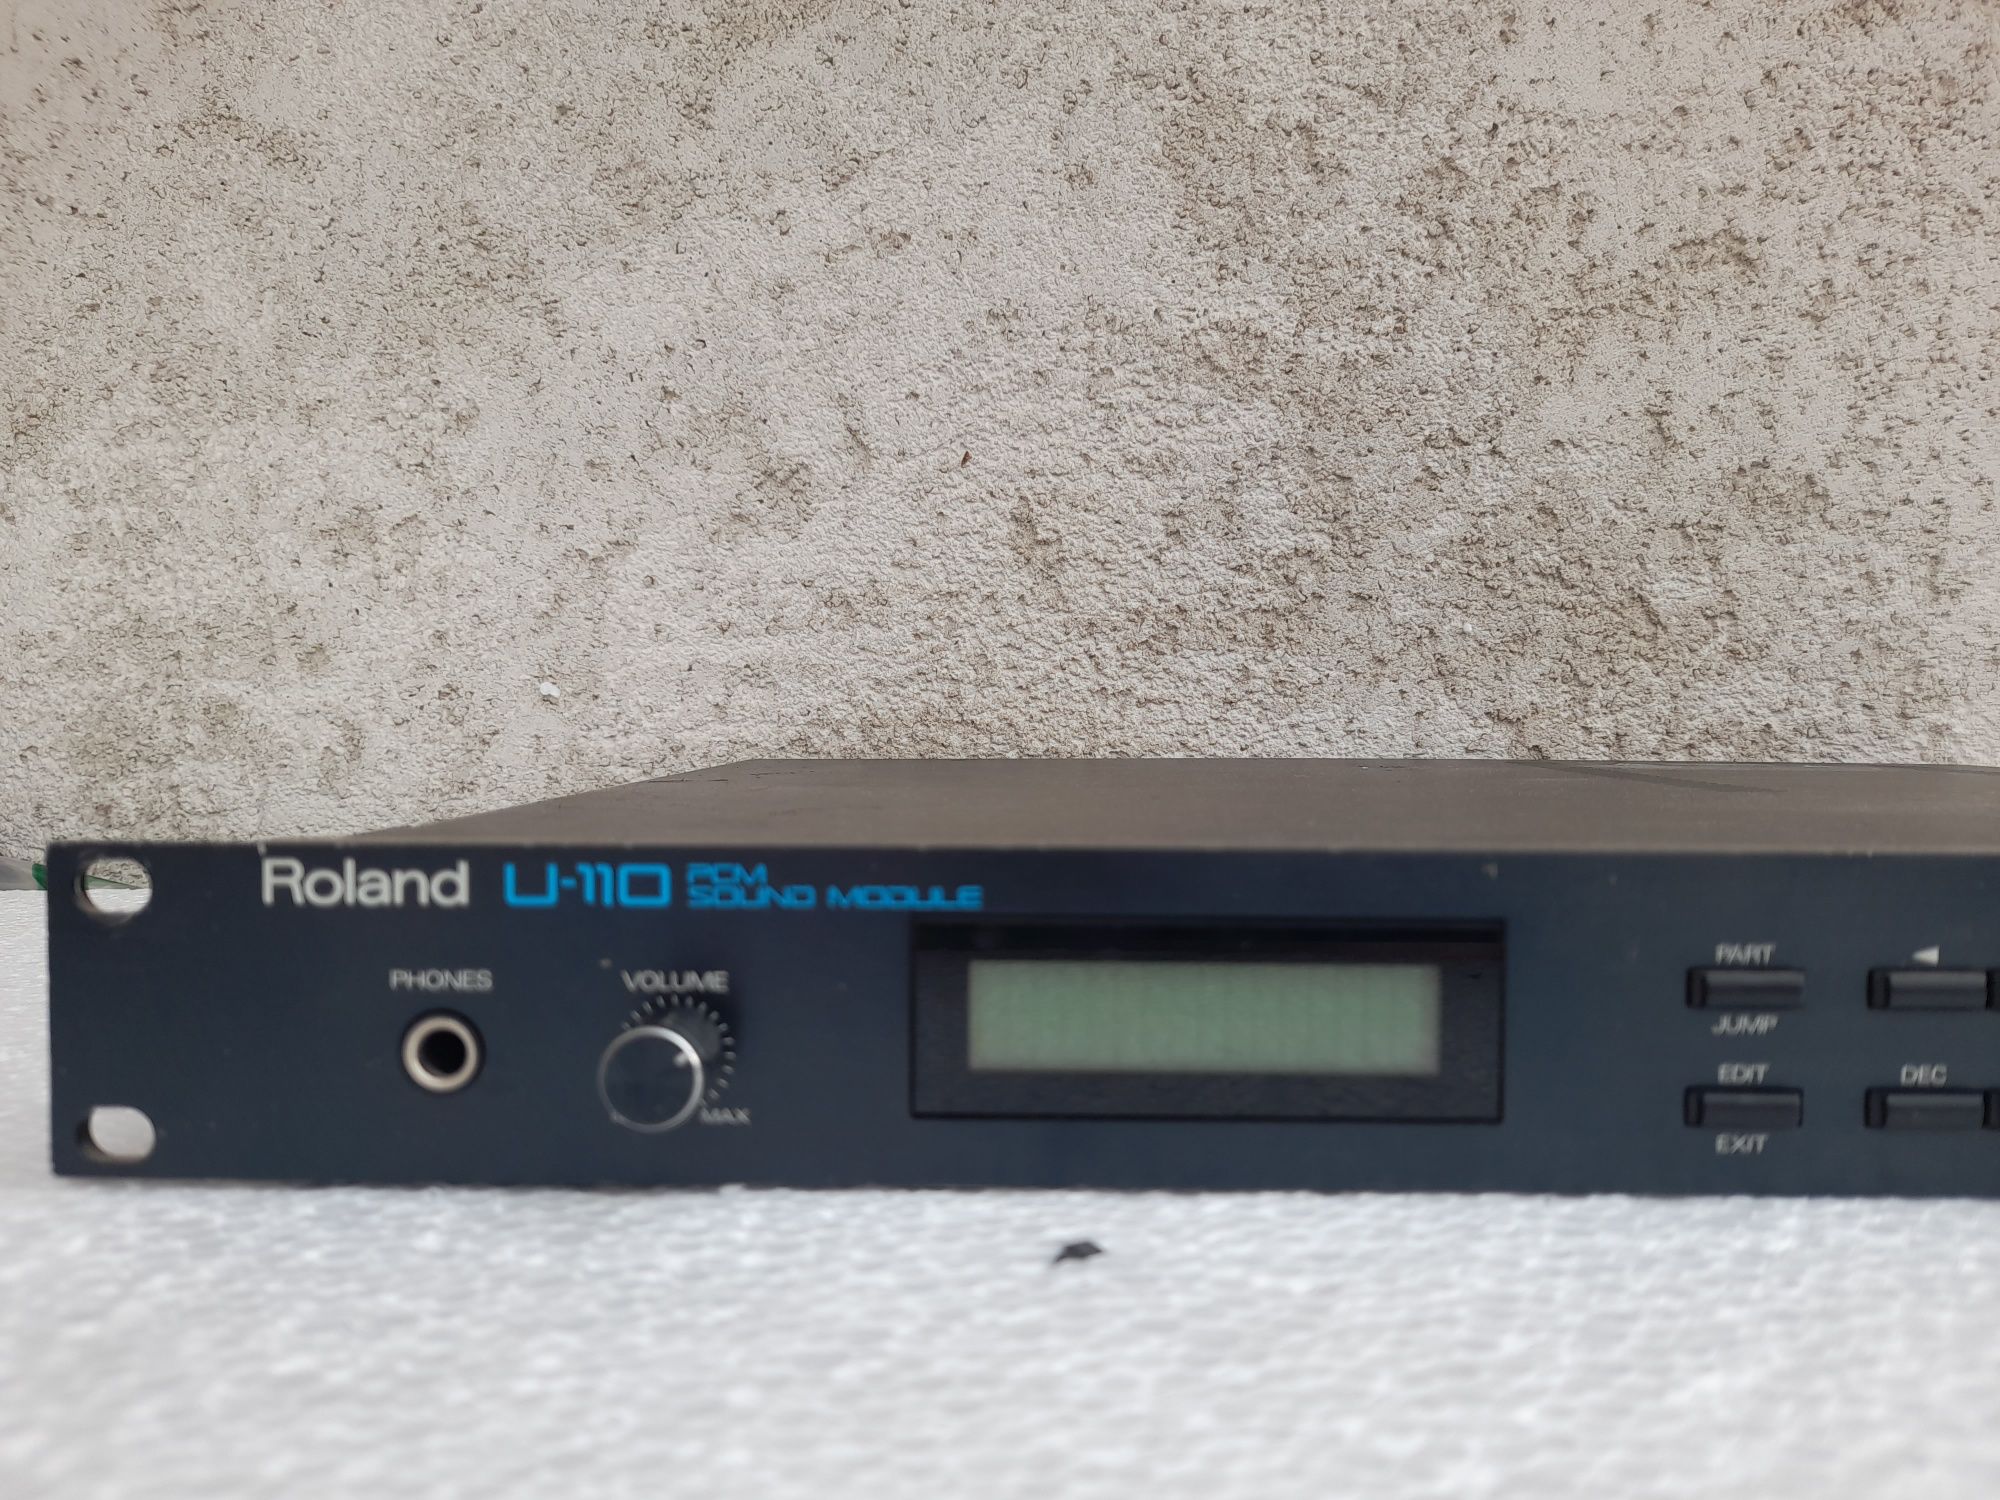 procesor midi clape Roland U-110